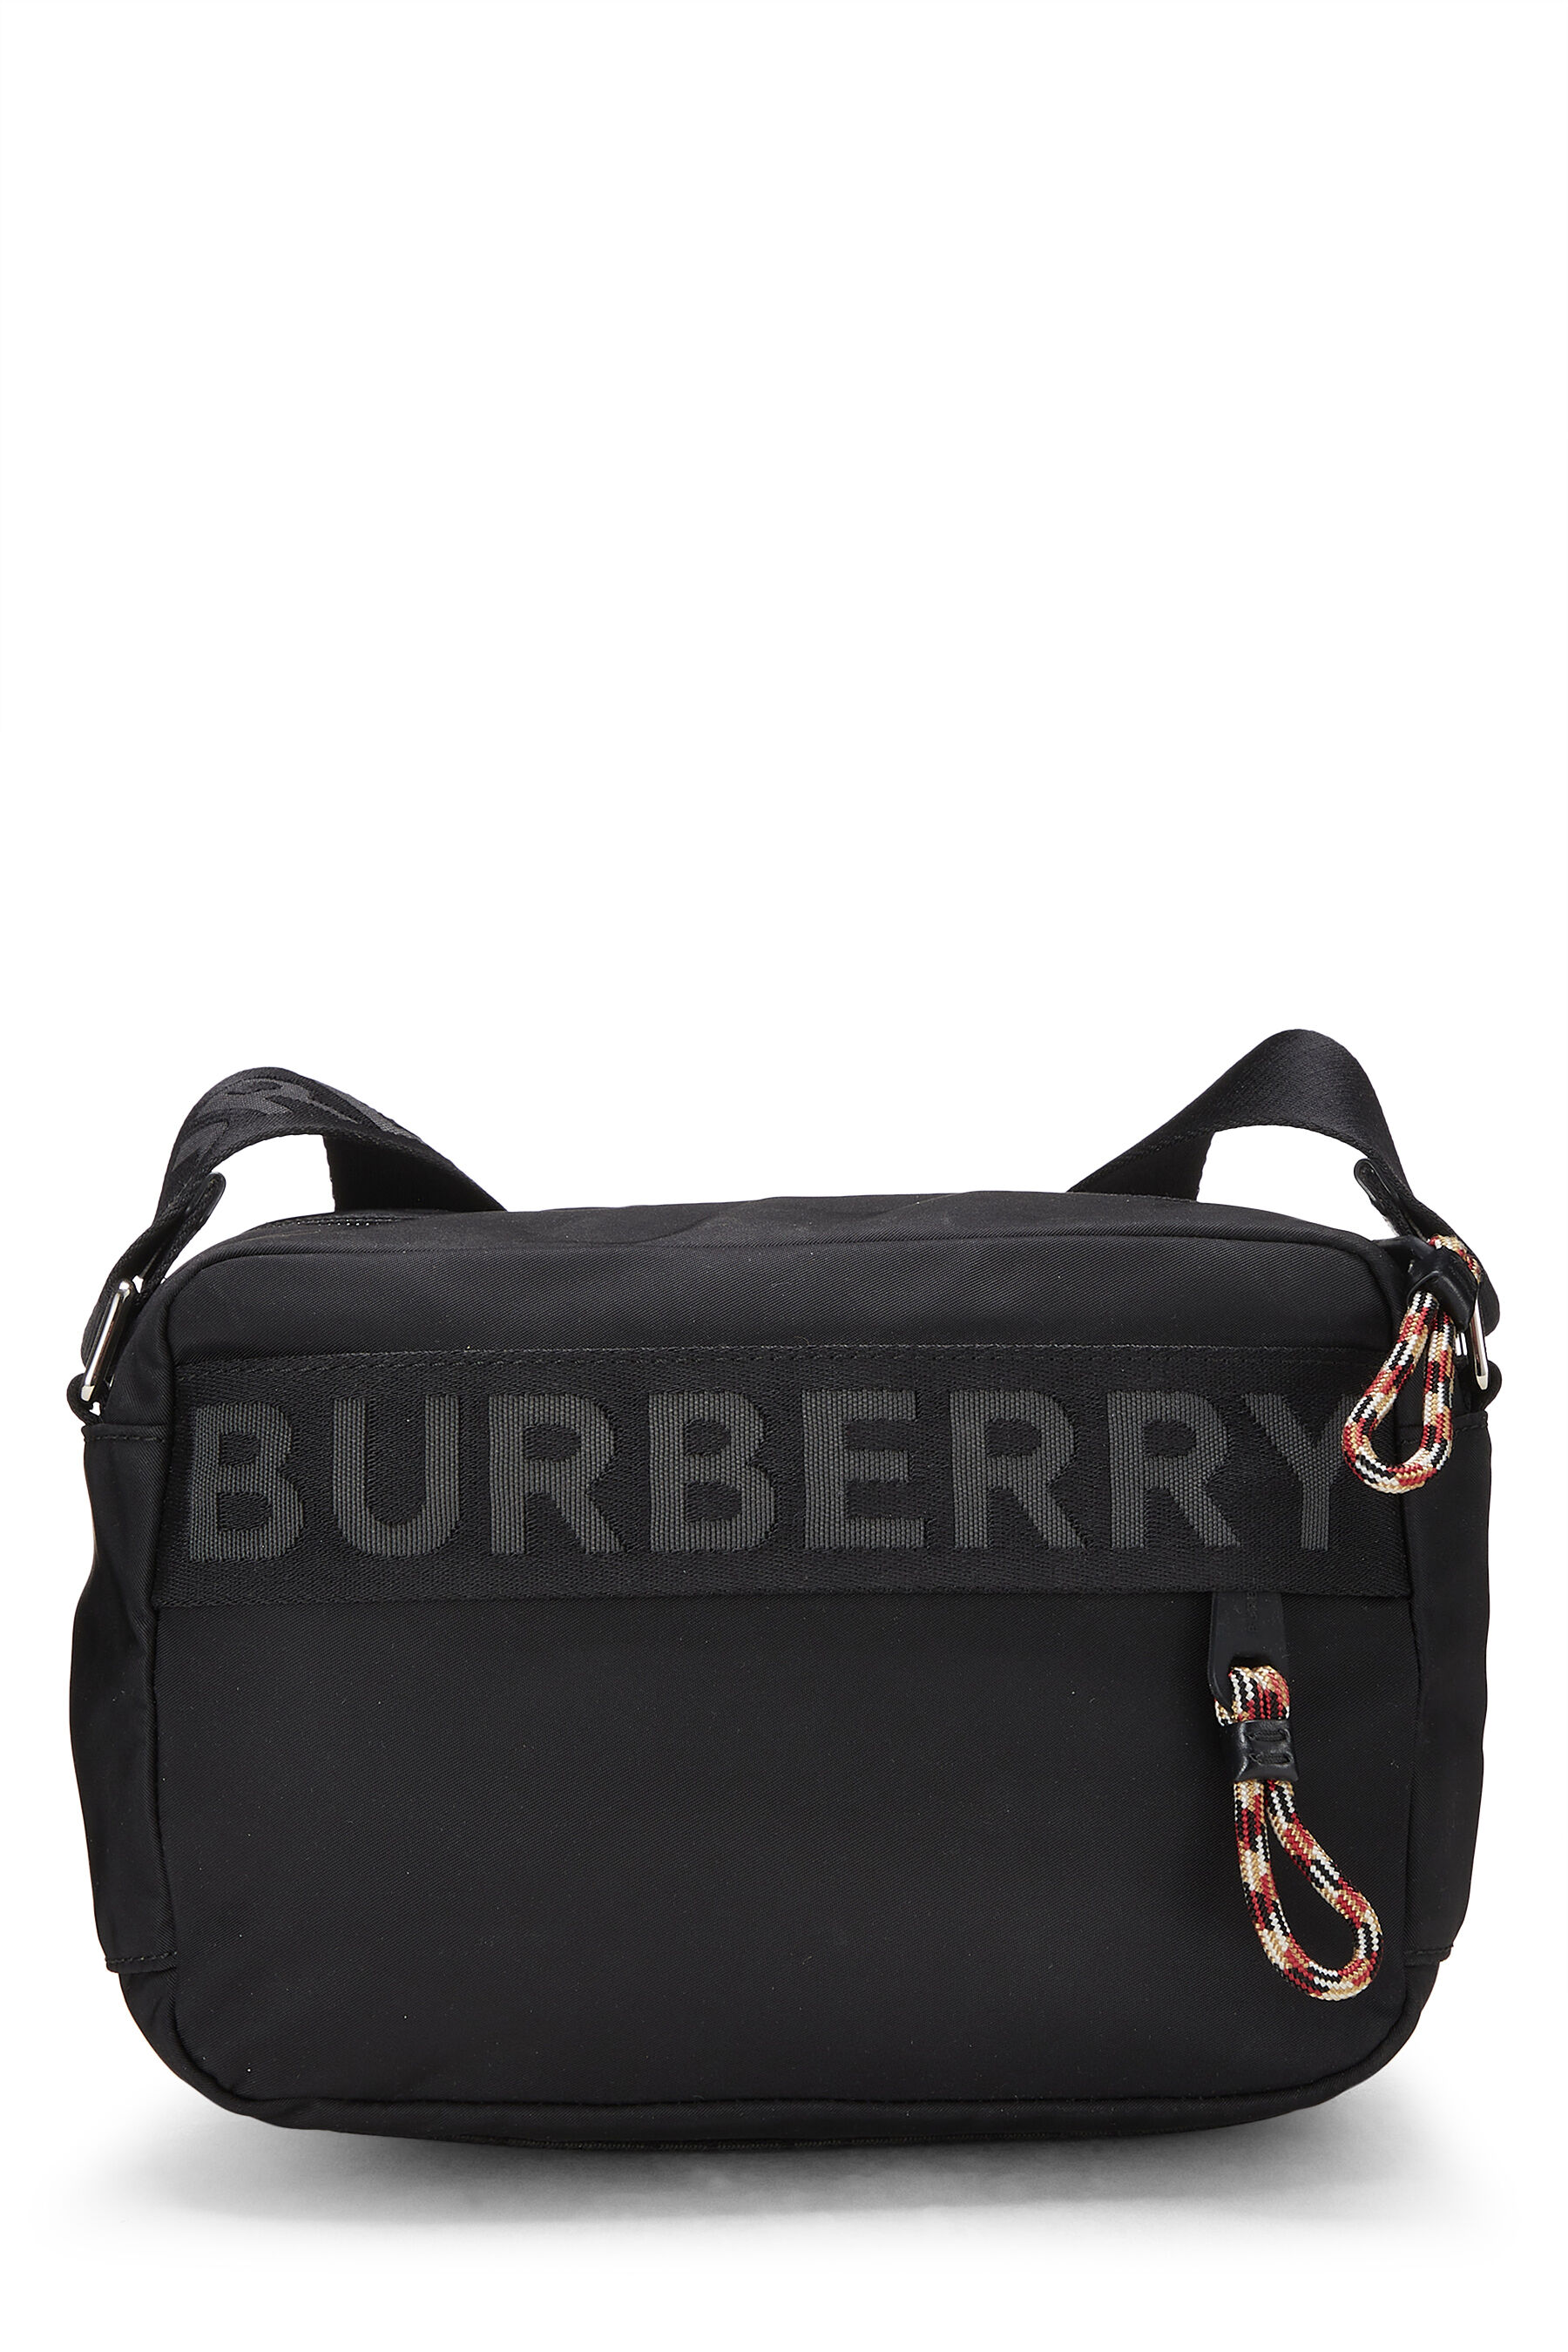 Burberry Black Nylon Shoulder Bag QLB05921KB001 | WGACA